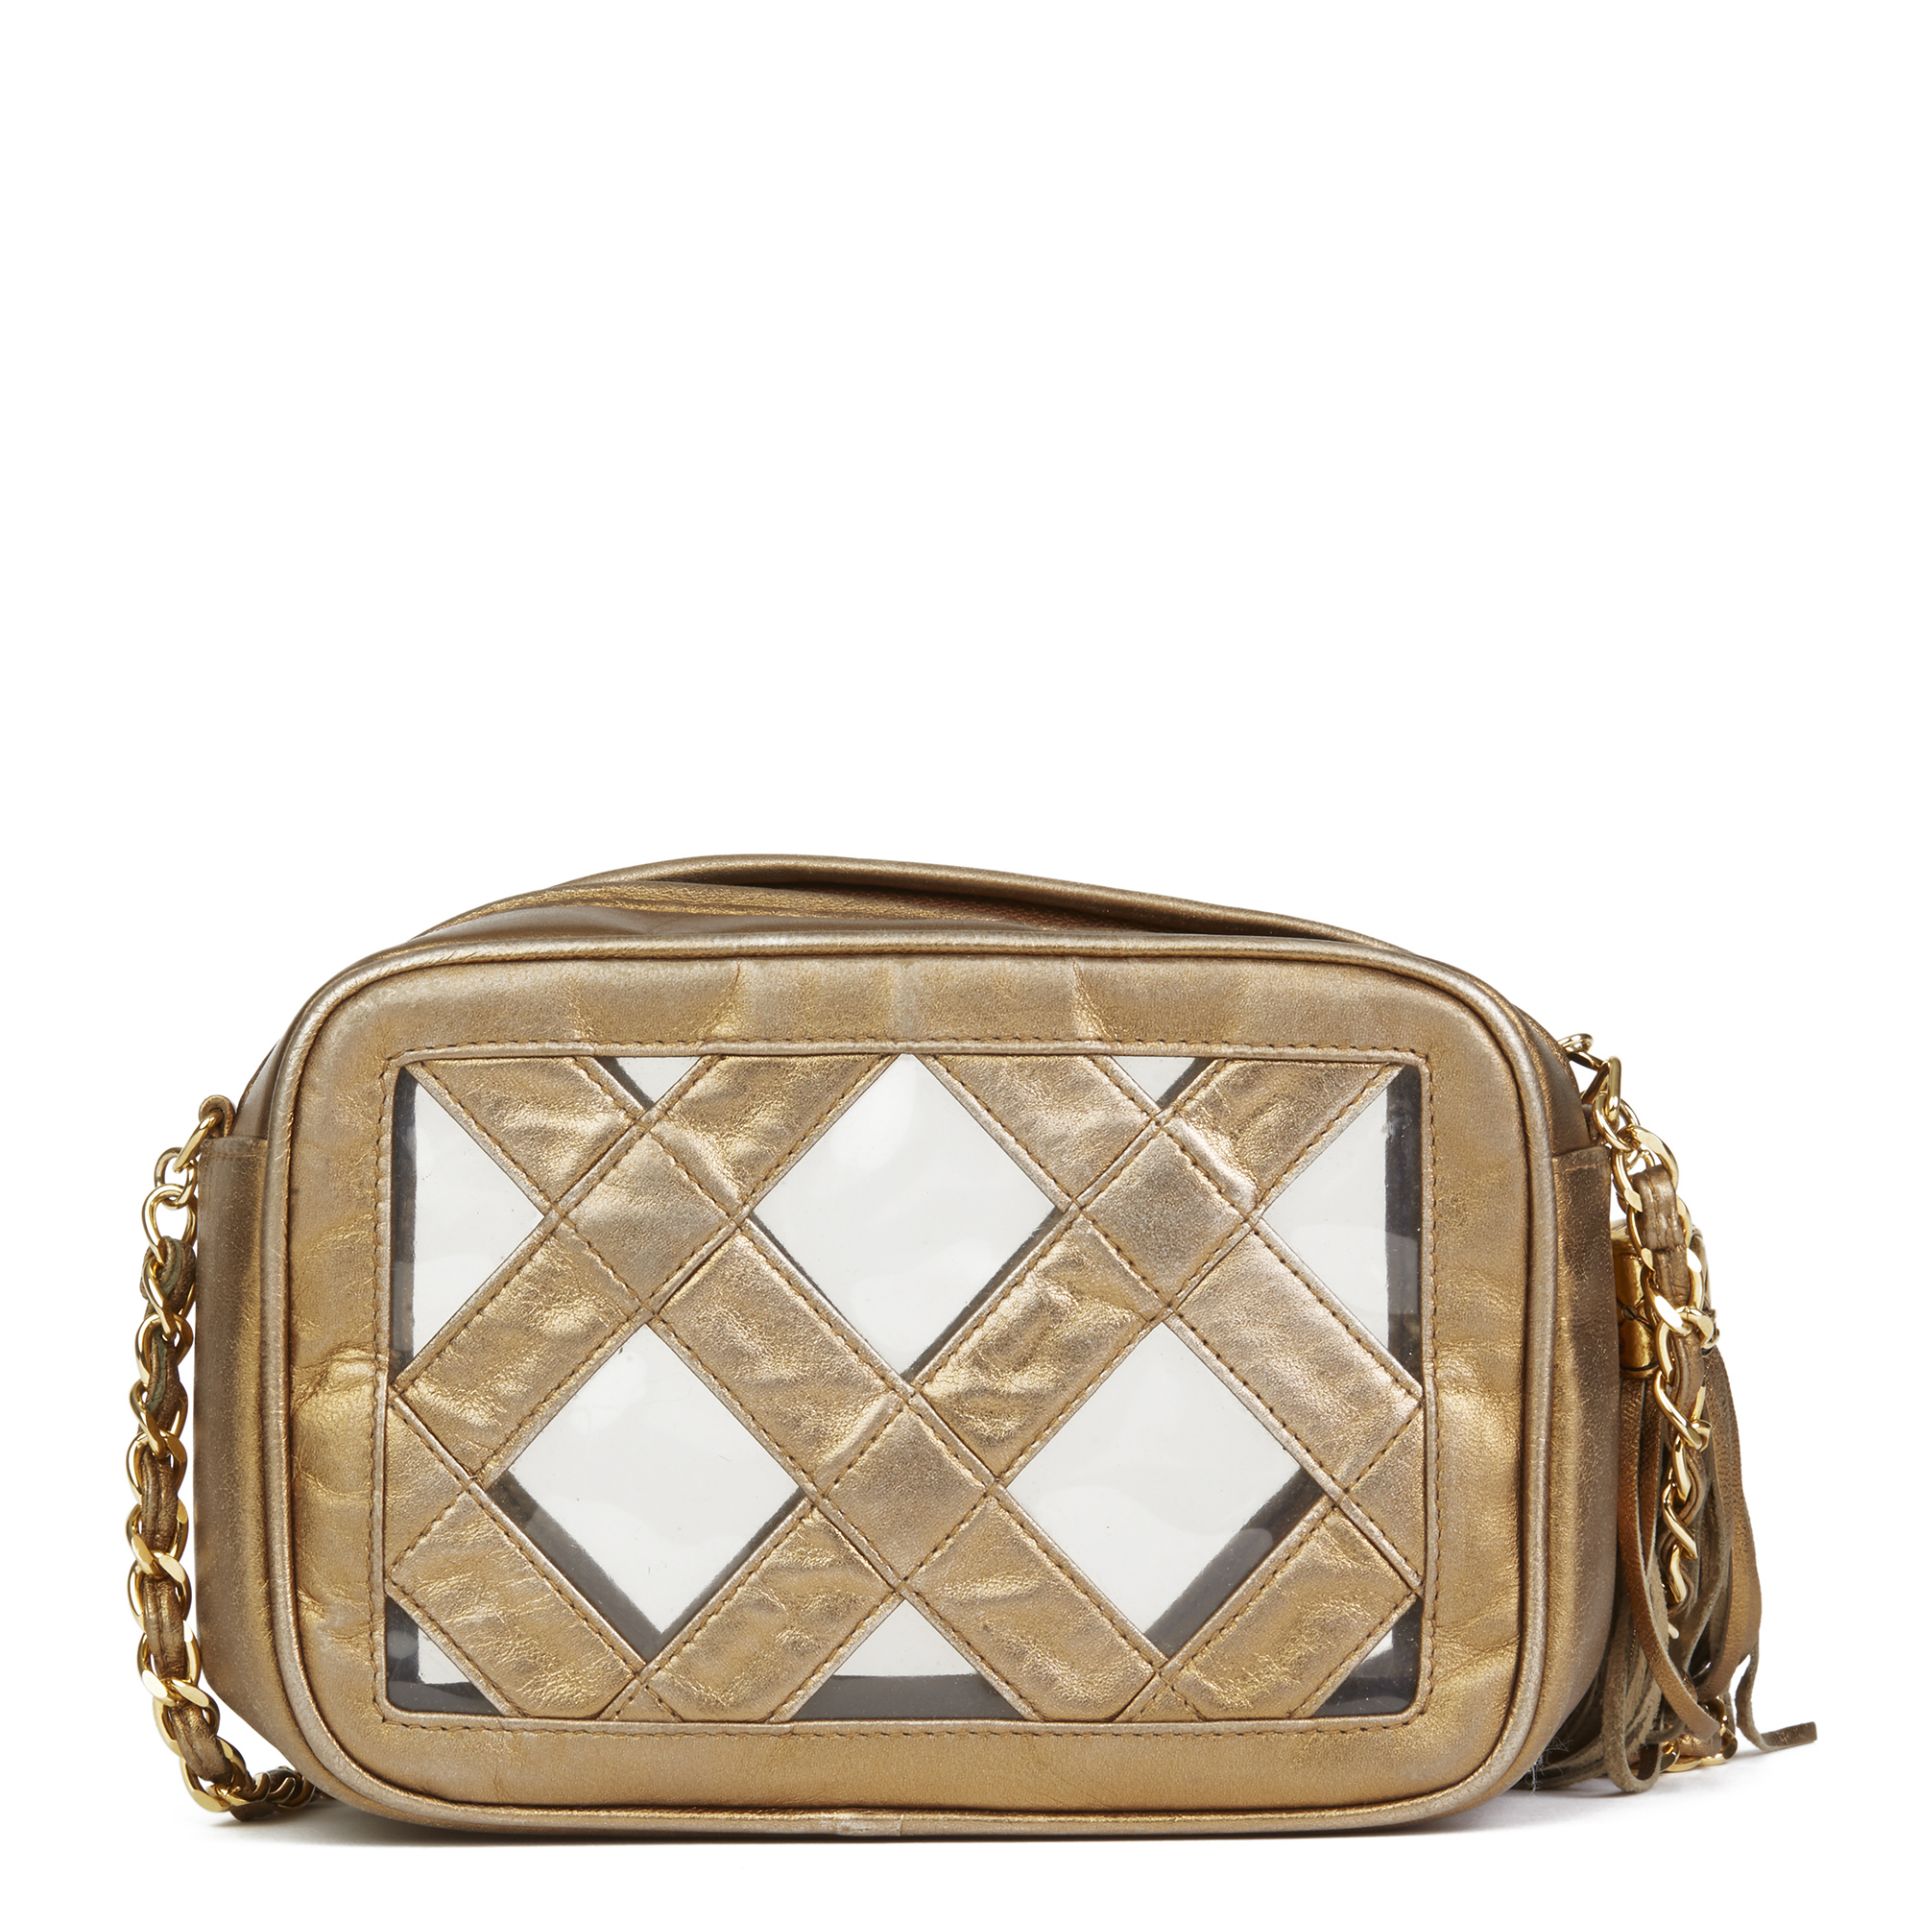 Chanel Gold Metallic Lambskin & Pvc Vintage Naked Camera Bag - Image 8 of 10